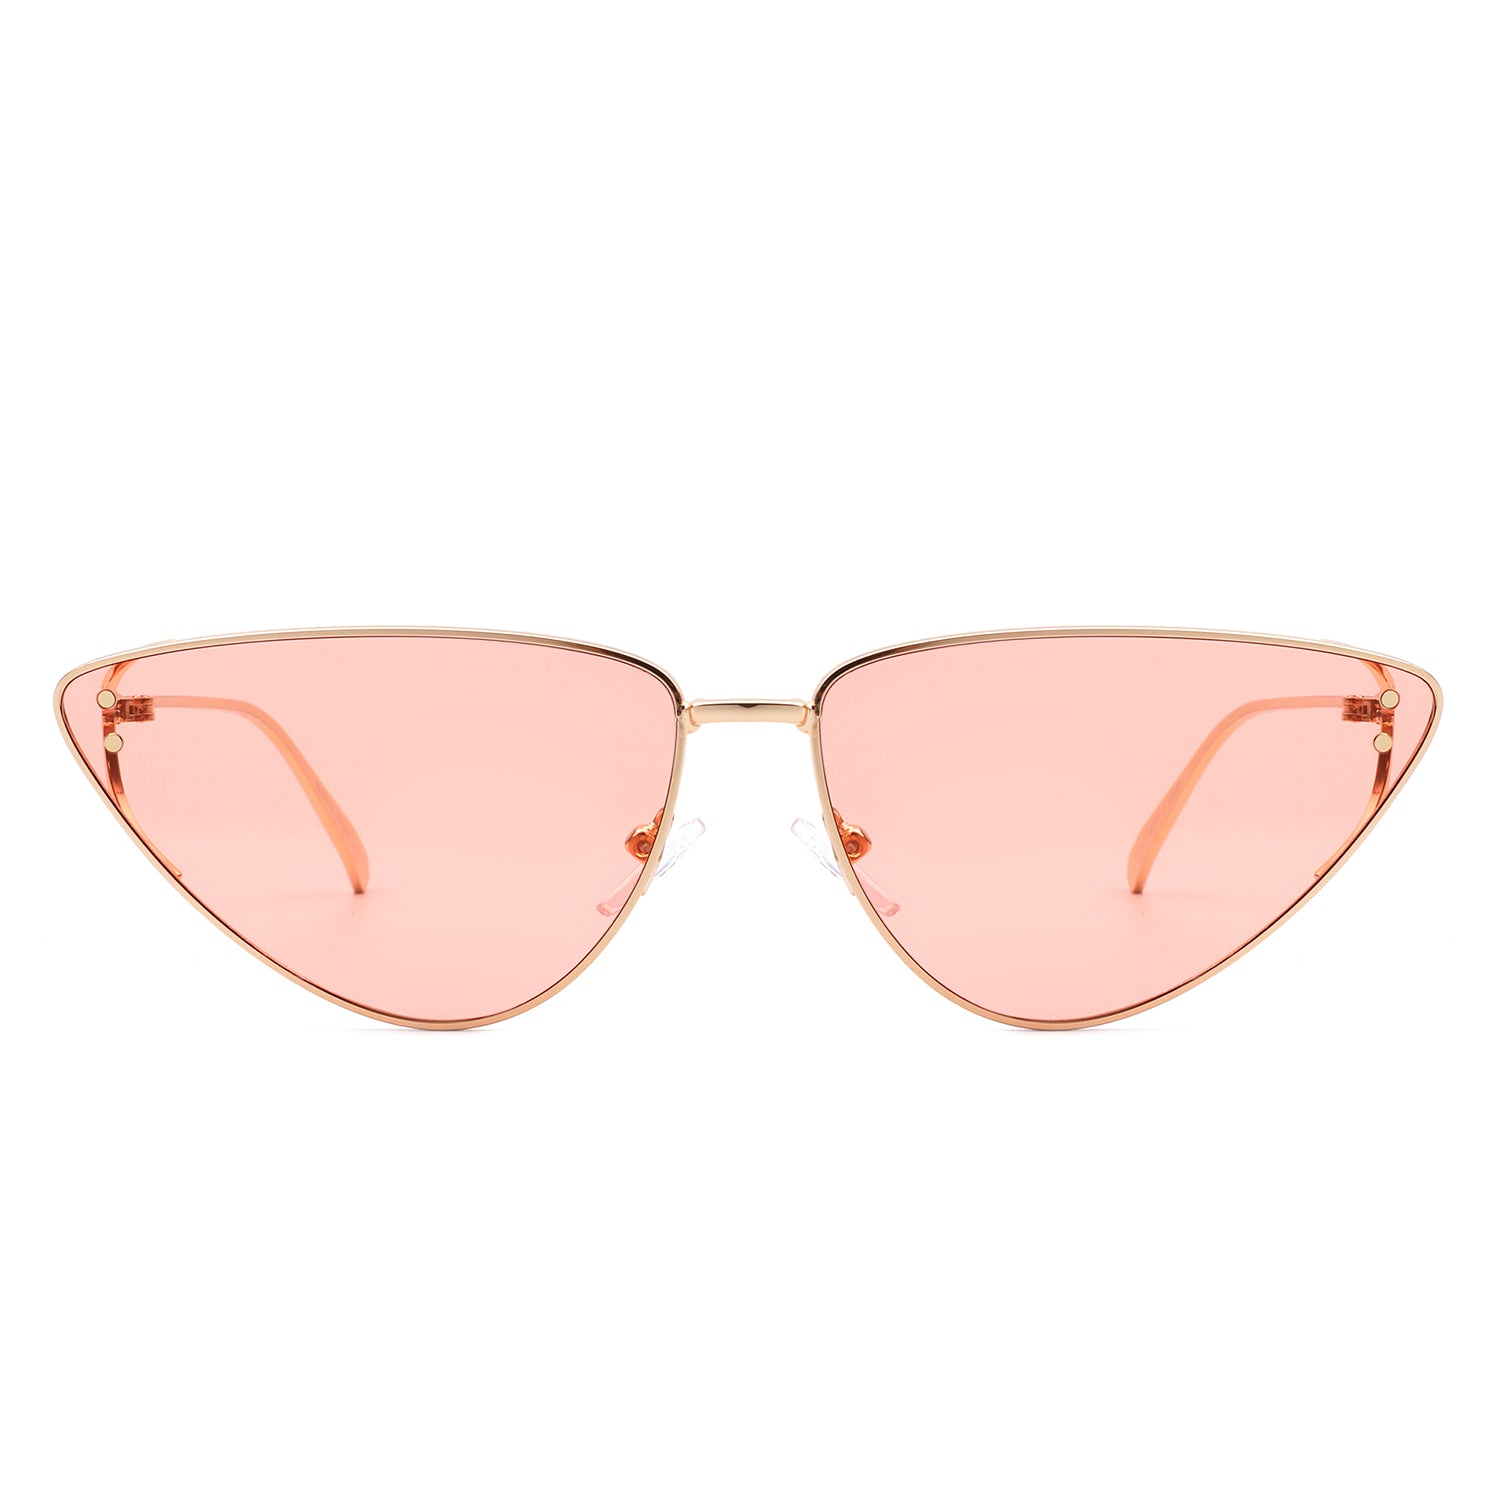 J2033 - Retro Tinted Flat Lens Fashion Cat Eye Sunglasses